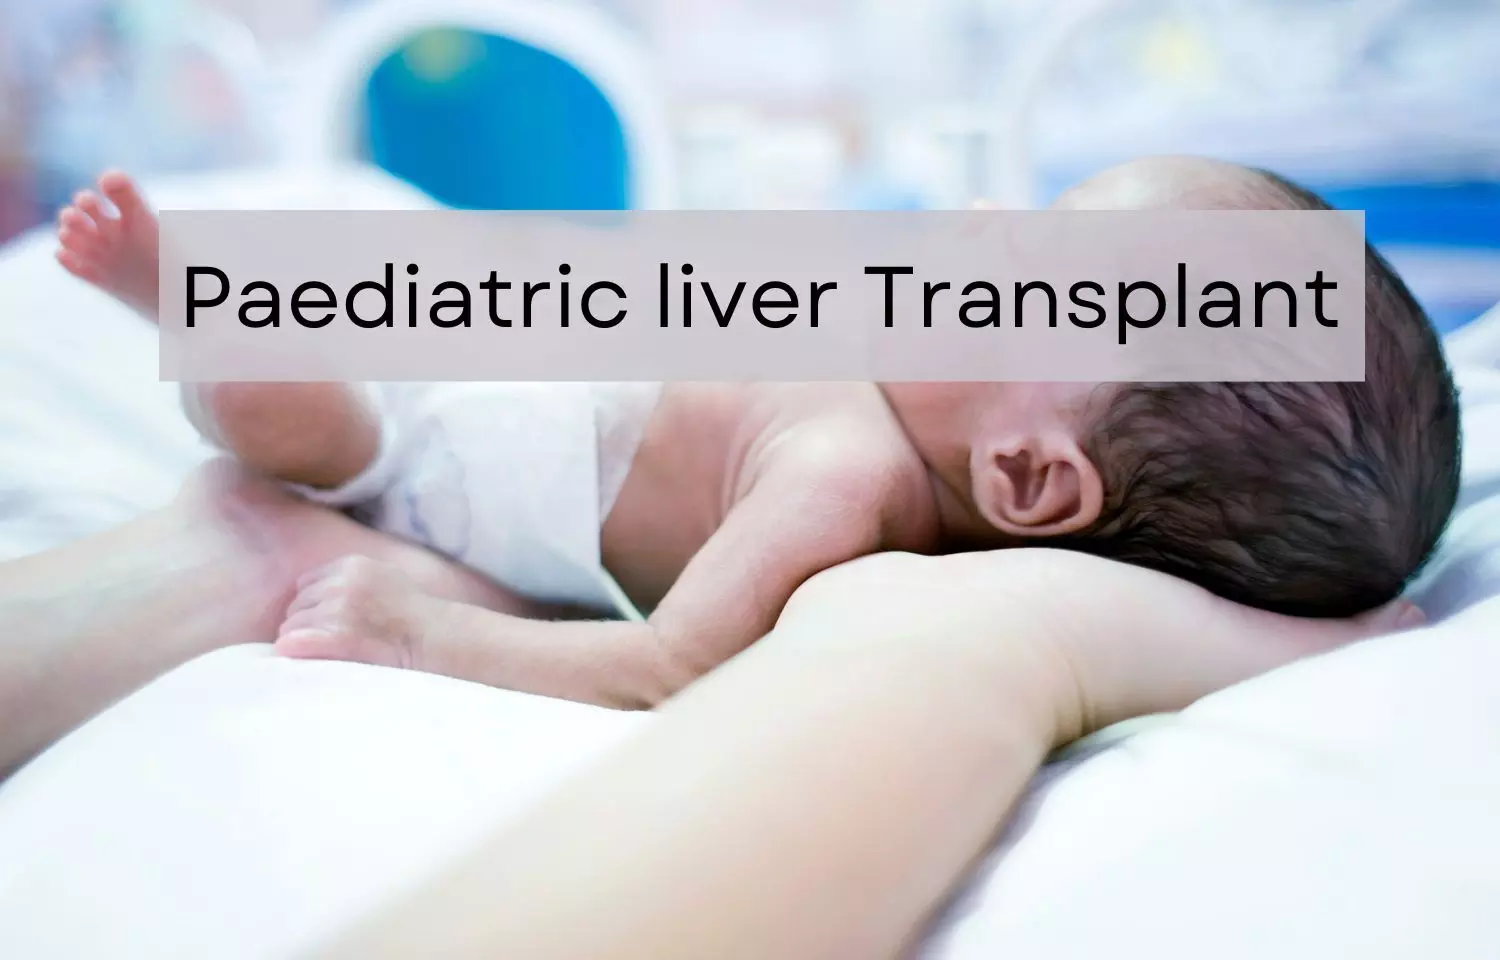 Odisha Govt signs MoU with Aster CMI Hospital for paediatric liver transplant